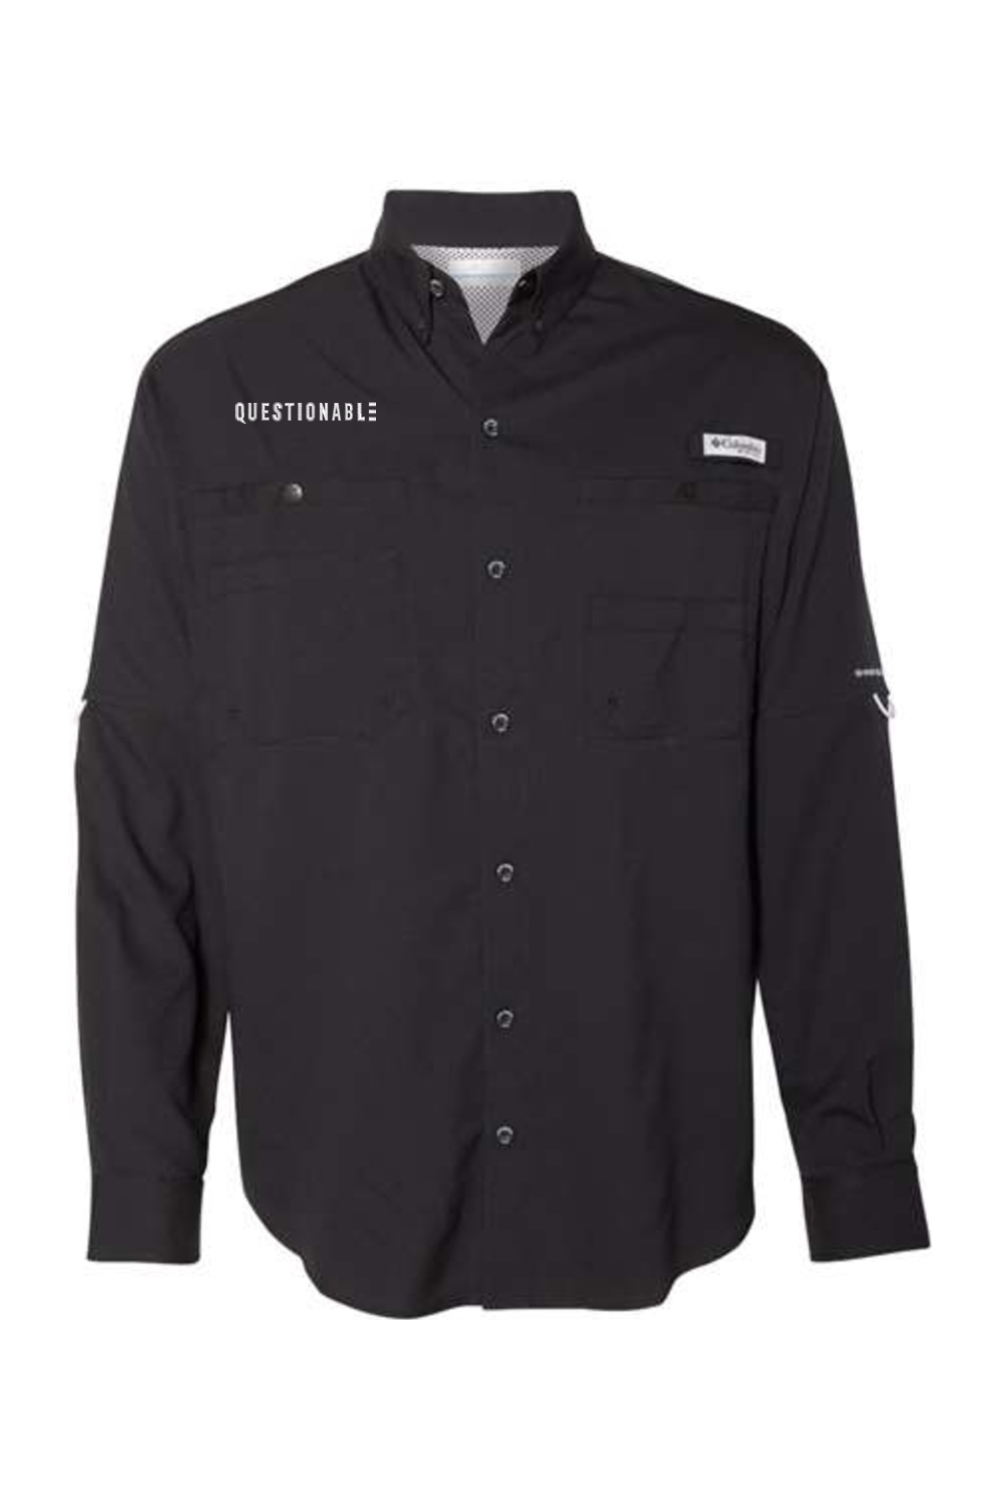 Questionable - Columbia PFG Tamiami™ II Long Sleeve Shirt